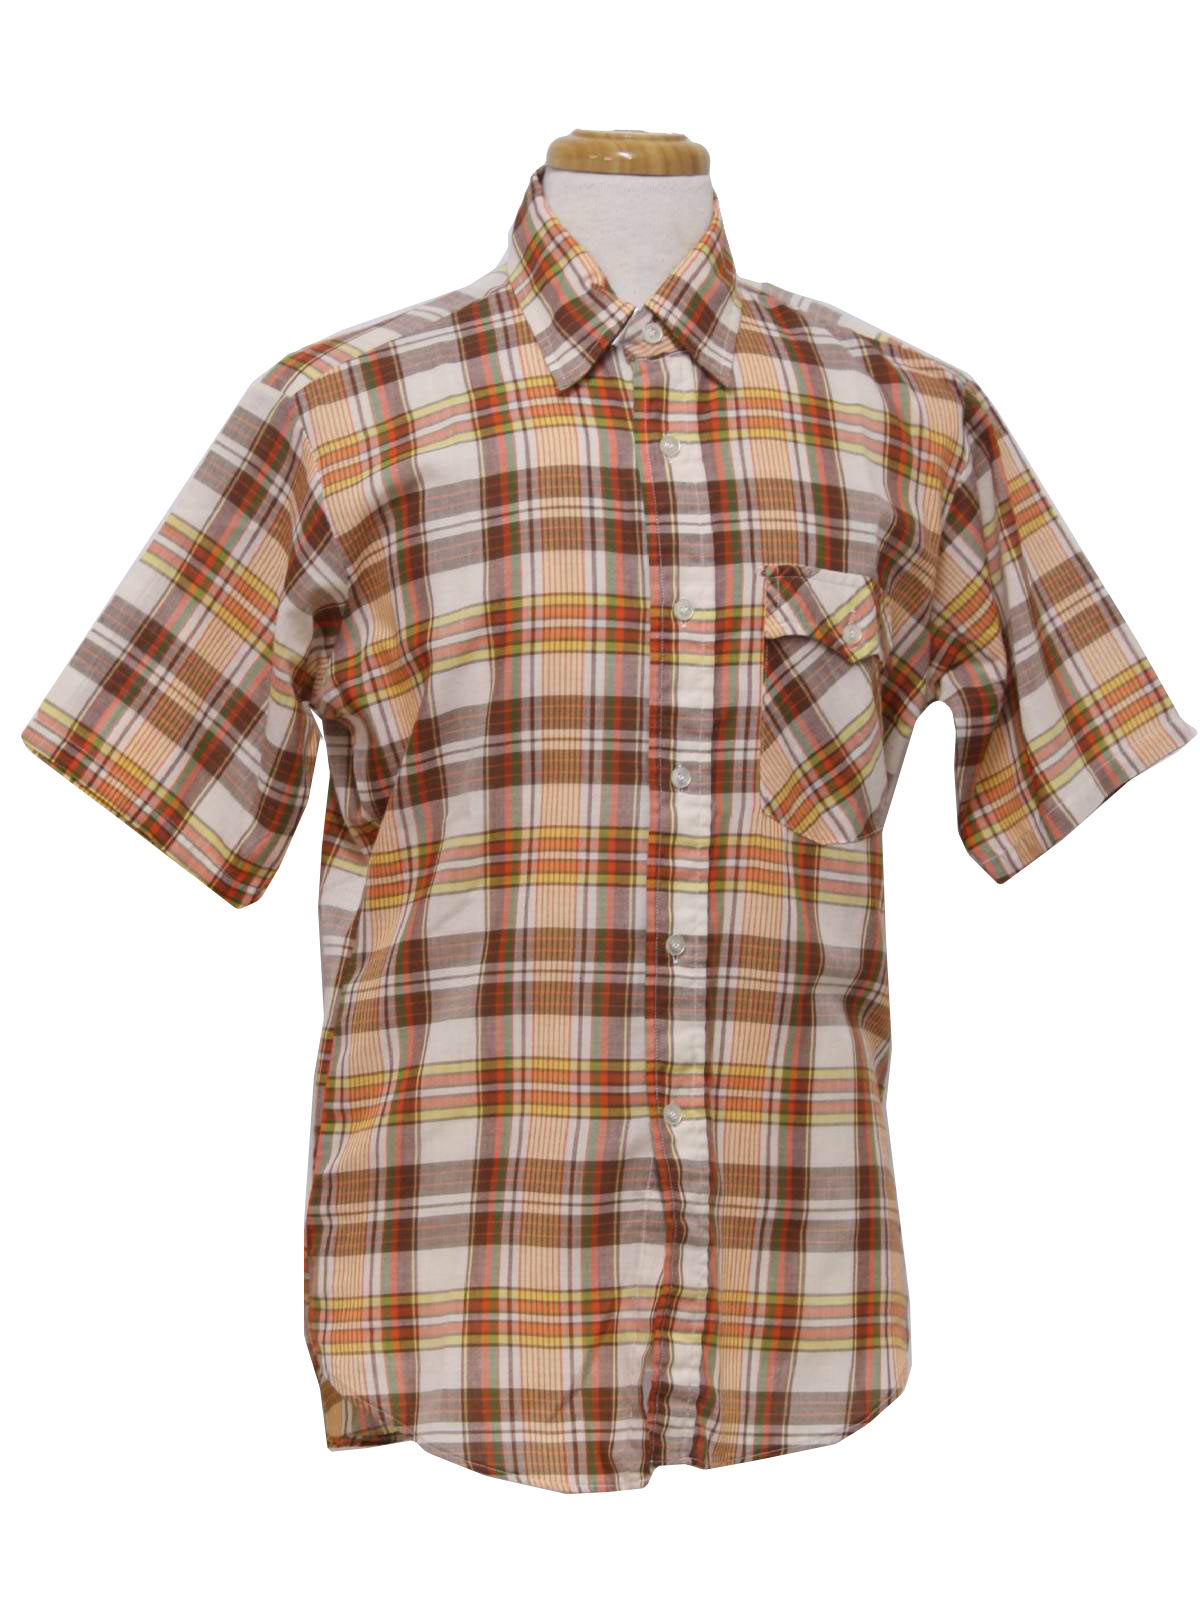 Retro 1980's Shirt (Plain Pockets, JC Penney) : Early 80s -Plain ...